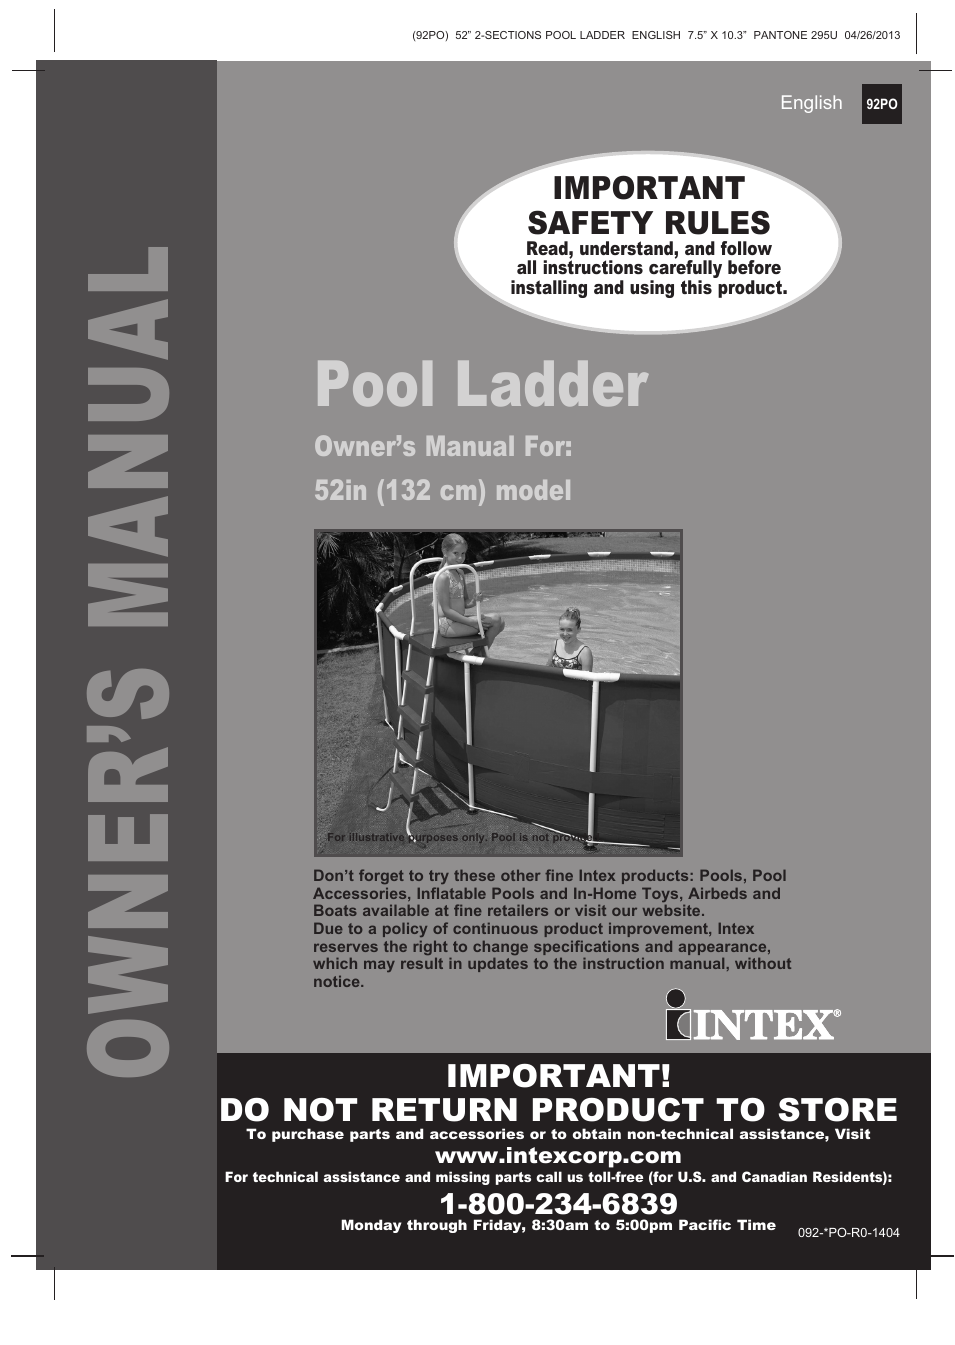 Pool Ladder For 52in (132 cm) model 2014